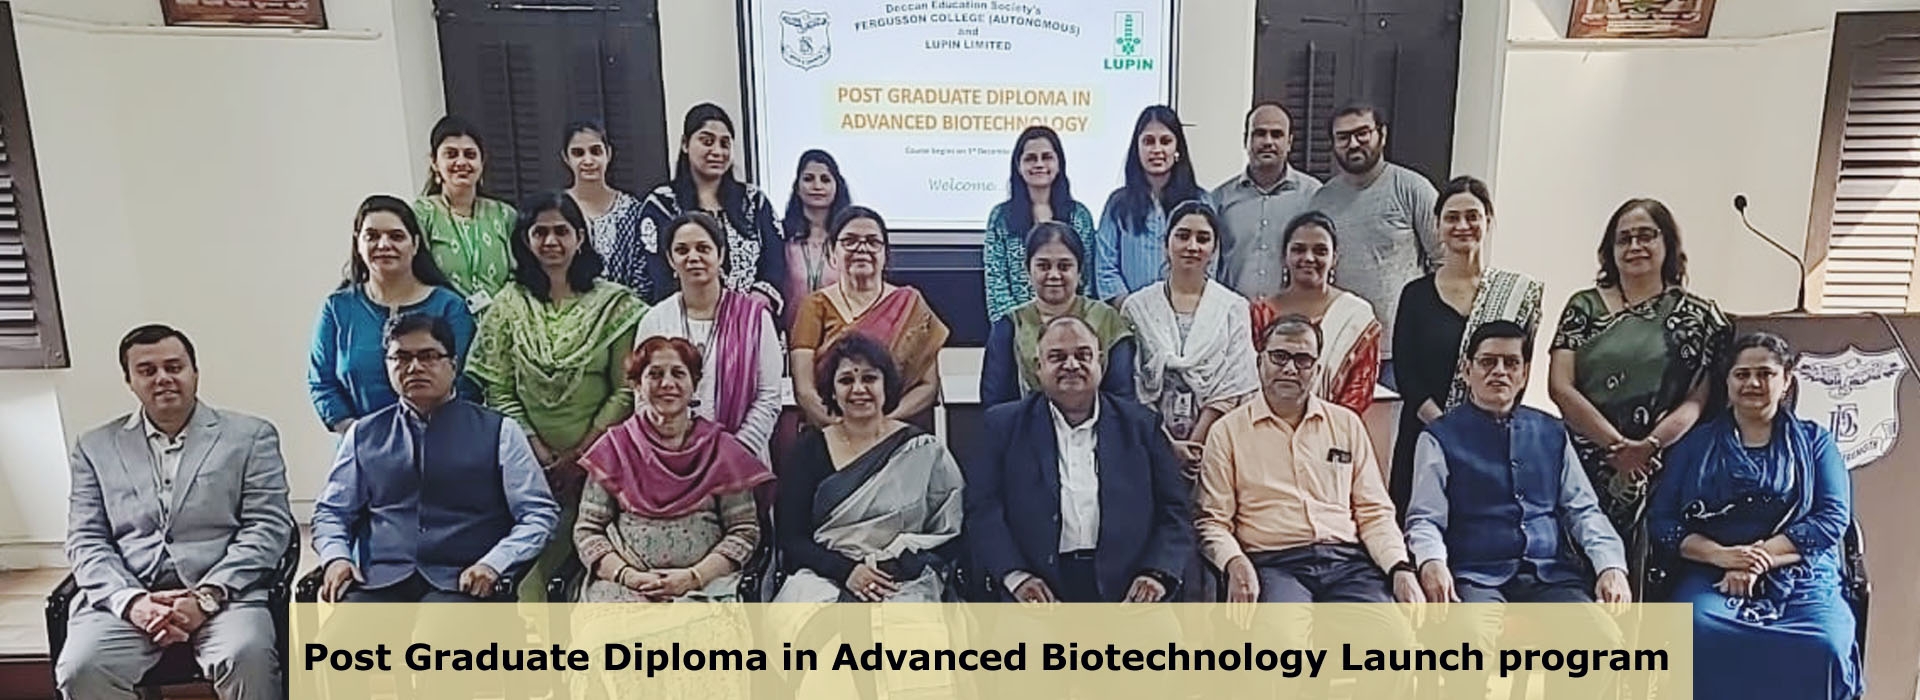 Post Graduate Diploma in Advanced Biotechnology Launch program_1